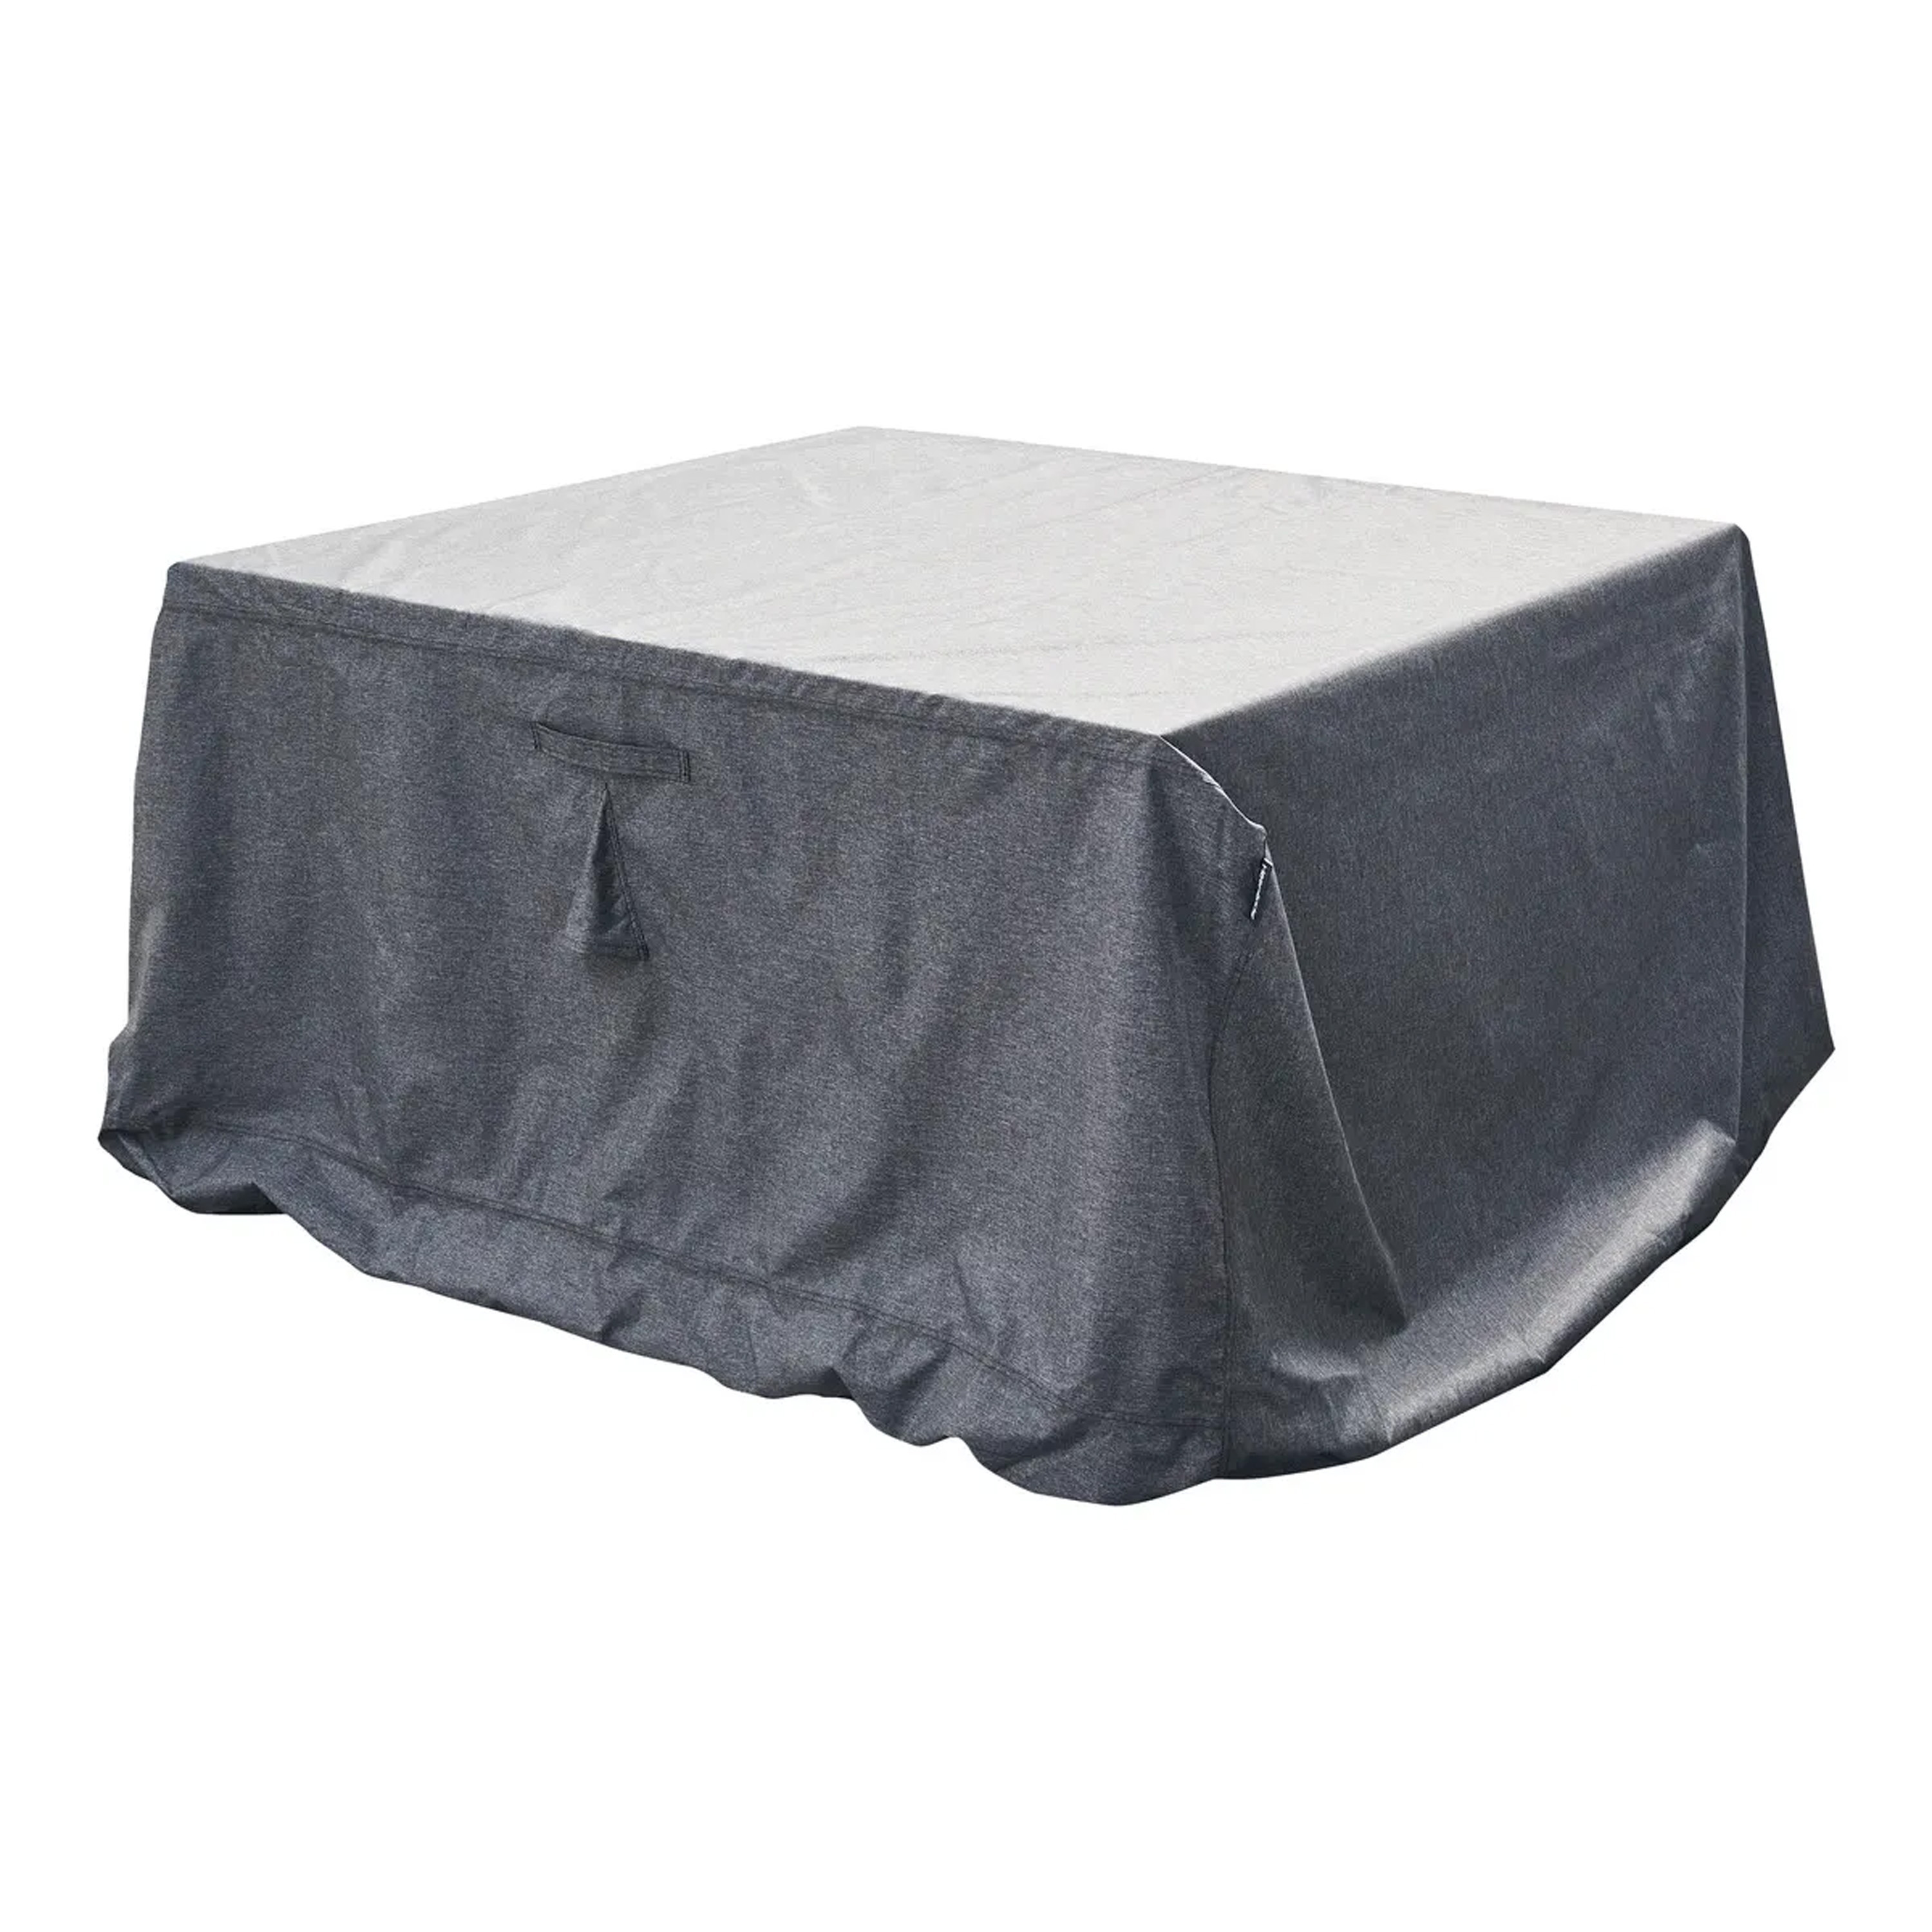 hesperide Hambo Schutzhülle für Tisch rechteckig m - 225 x 125 x 80 cm - Hespéride - Grau